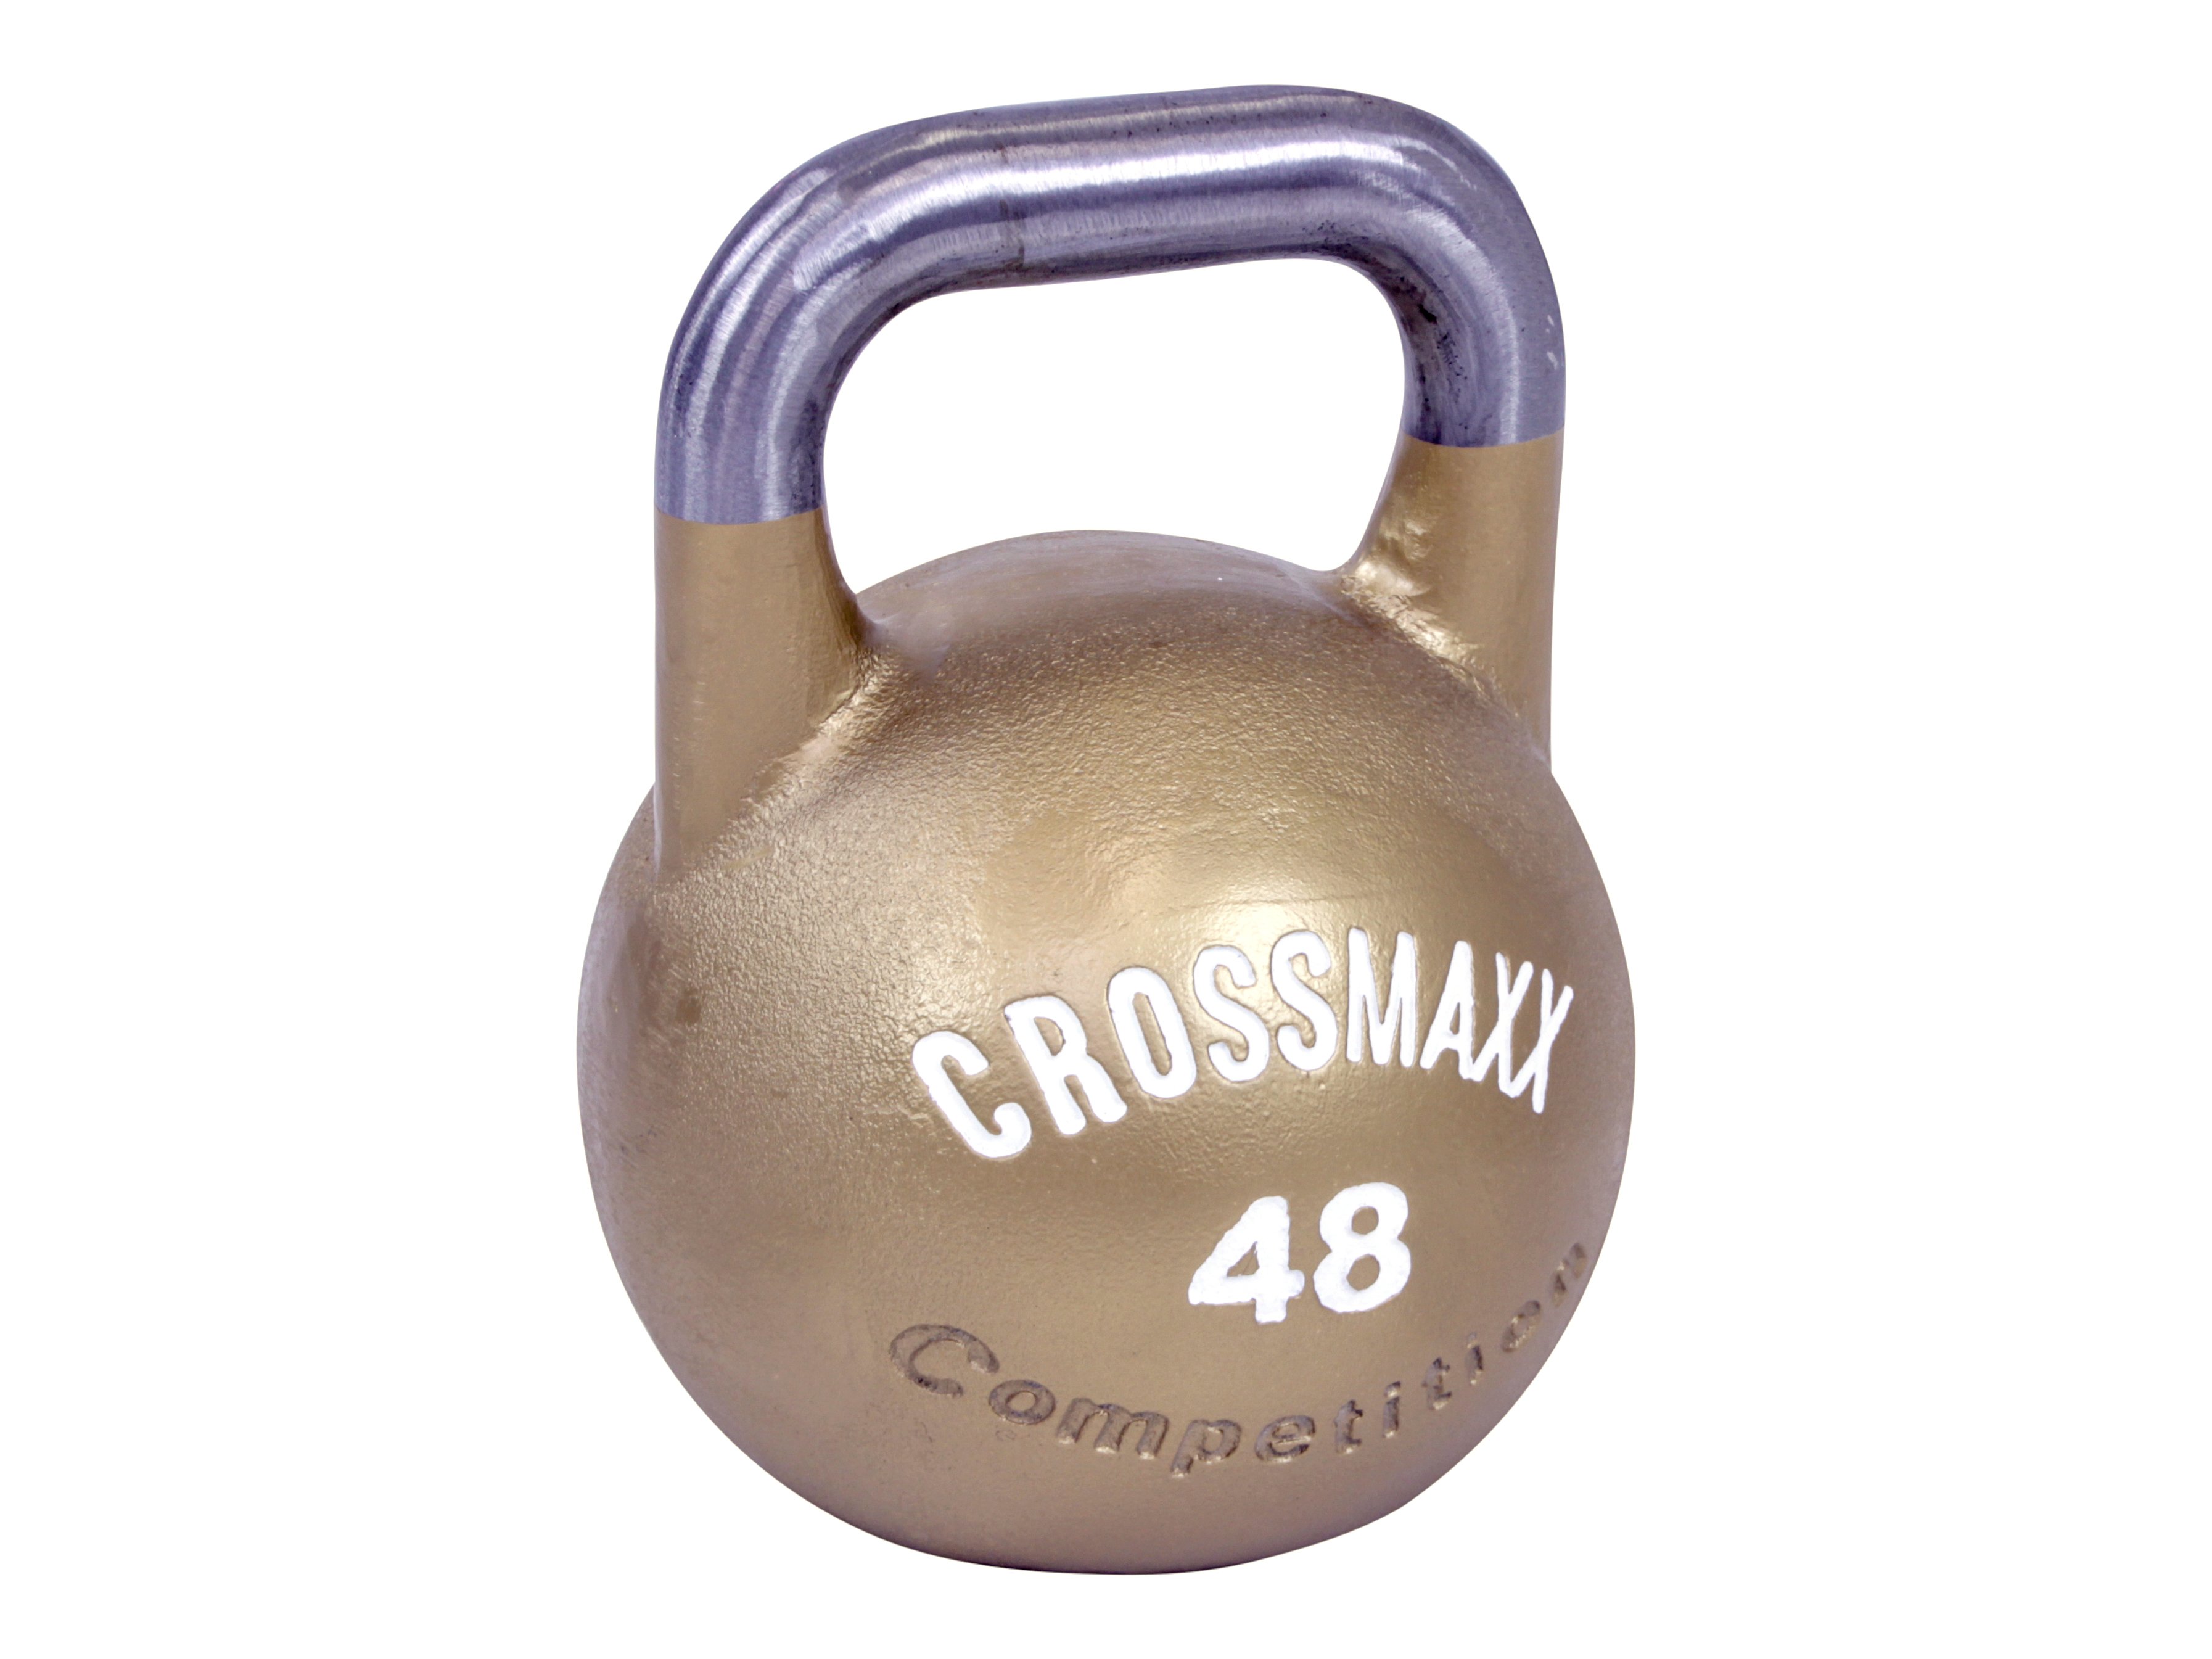 Crossmaxx Competition Kettlebell 48 kg